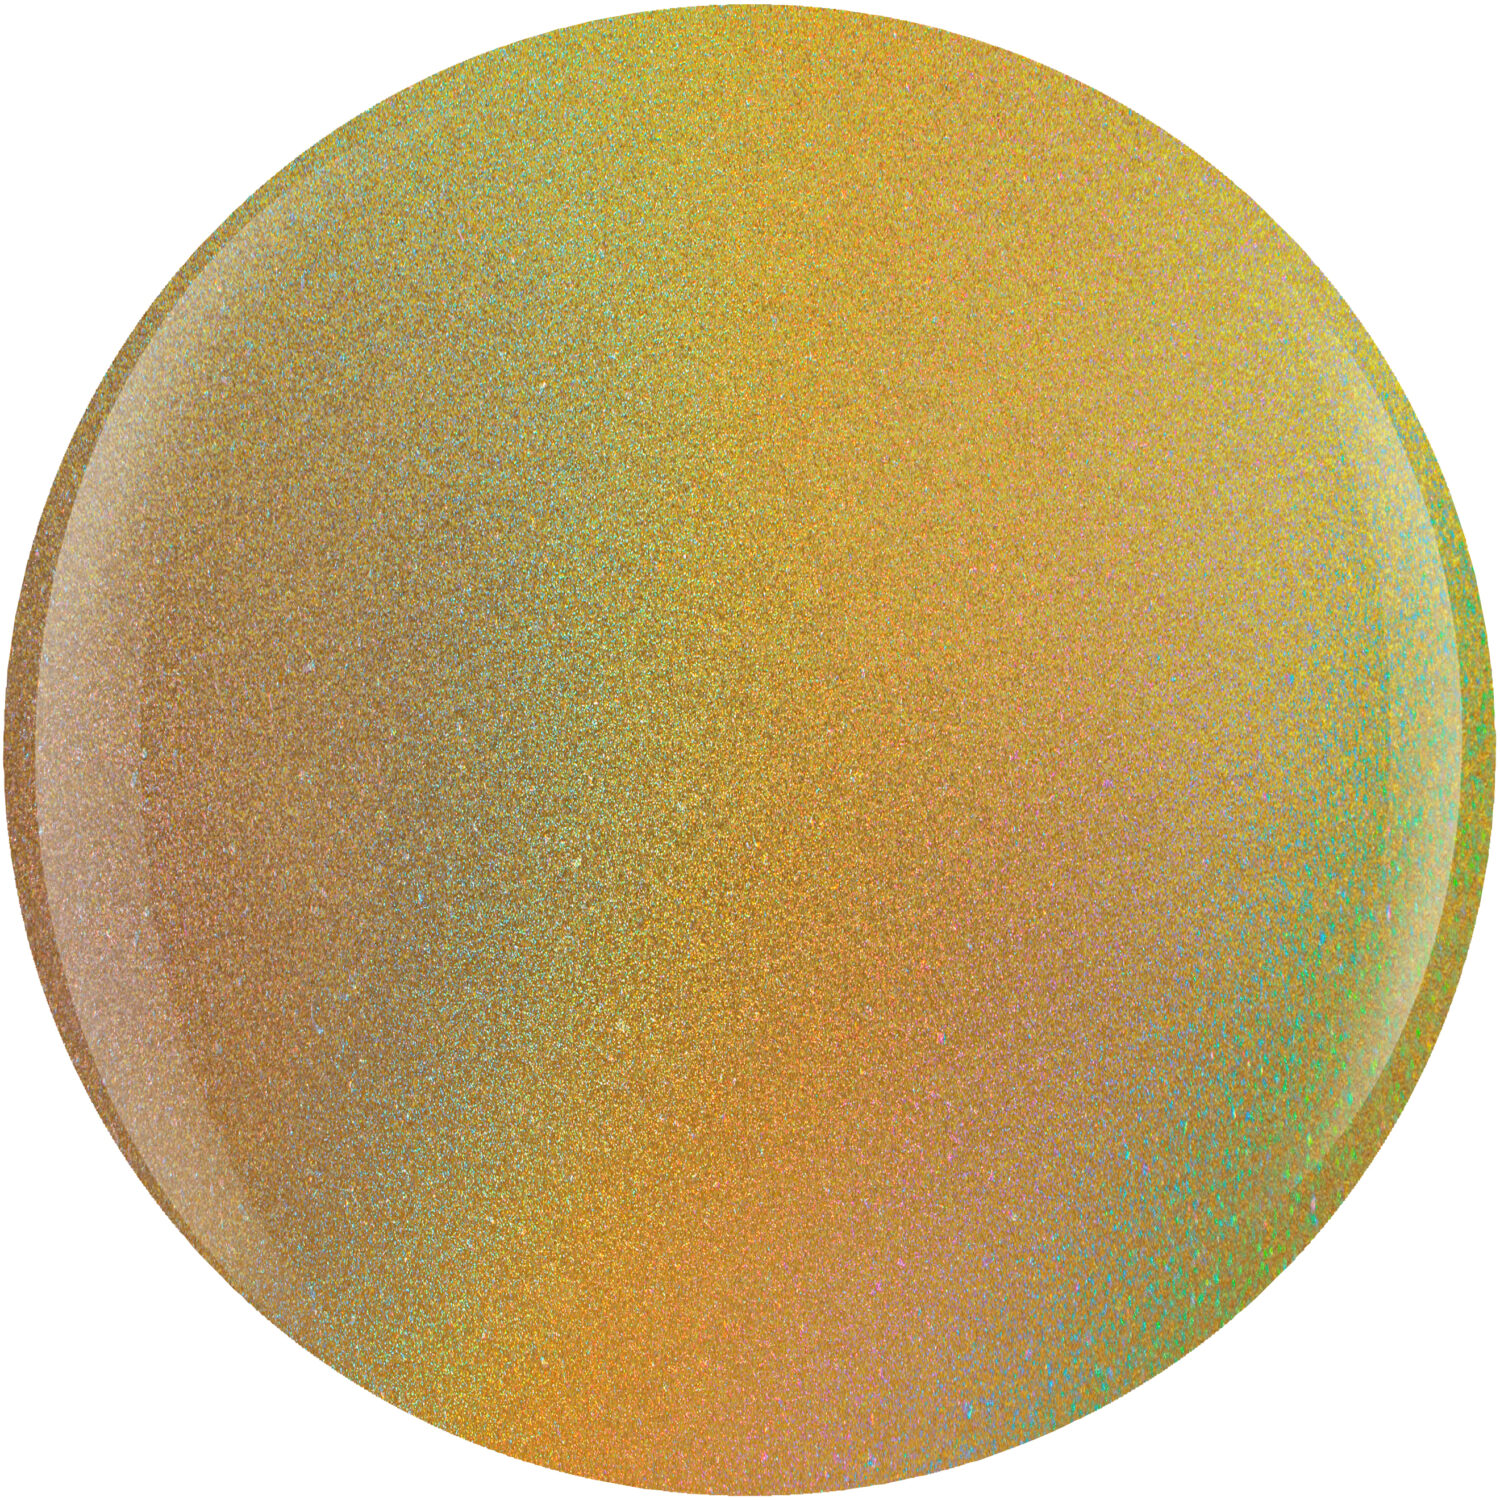 Gelish Chrome Stix Gold Holographic, 0.17 oz.